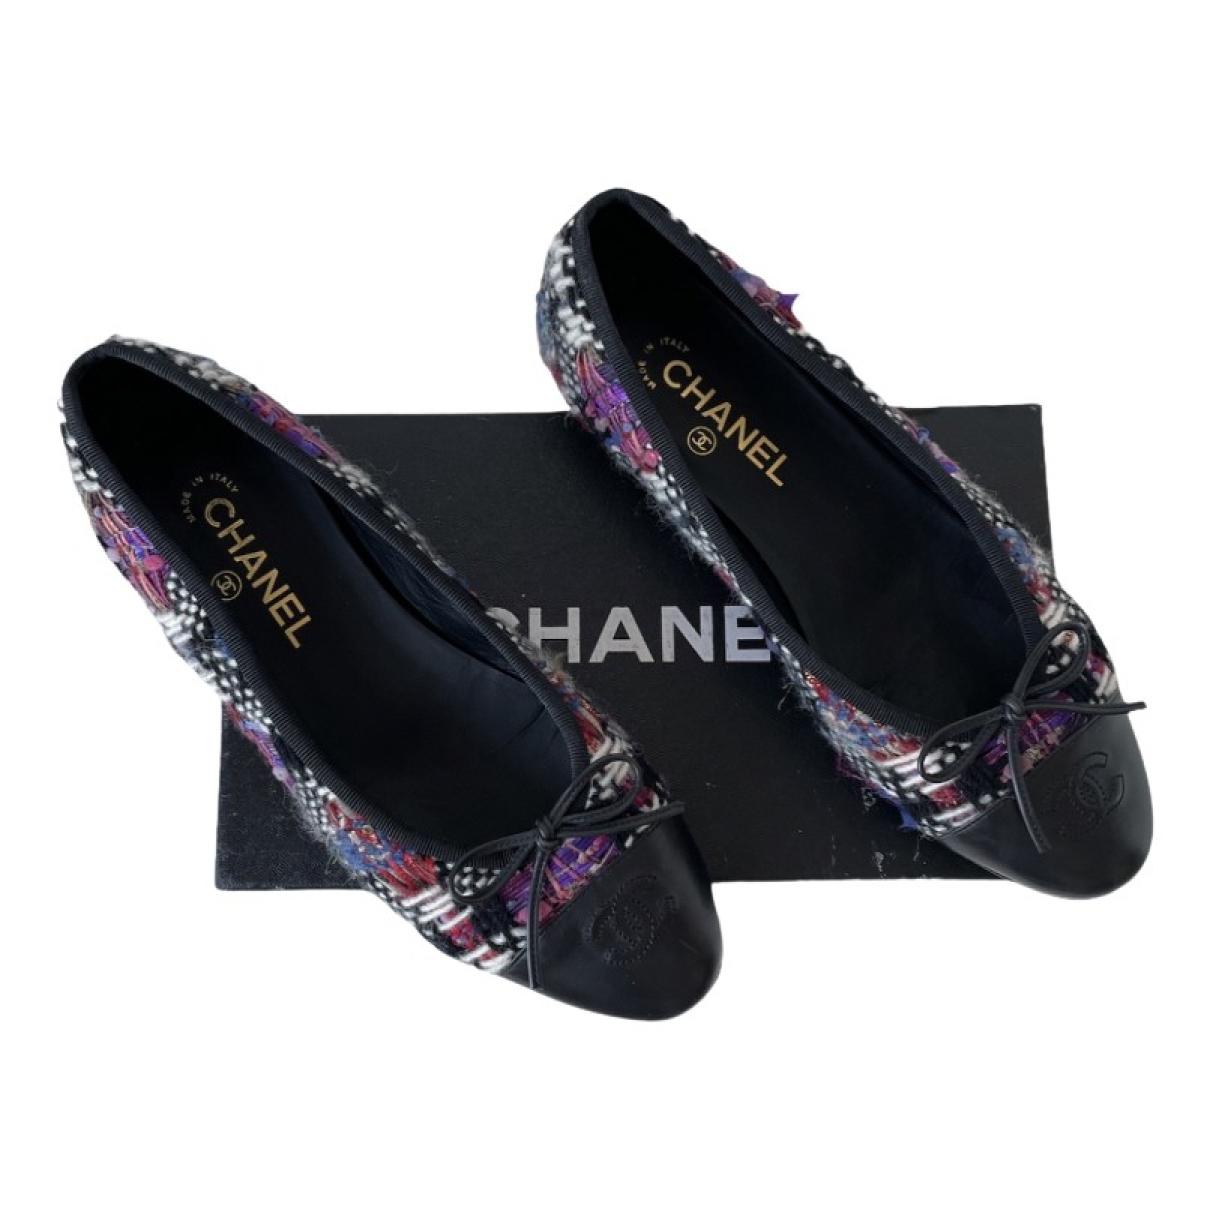 Chanel Tweed Flower Ballet Flats - Size 9.5 / 39.5